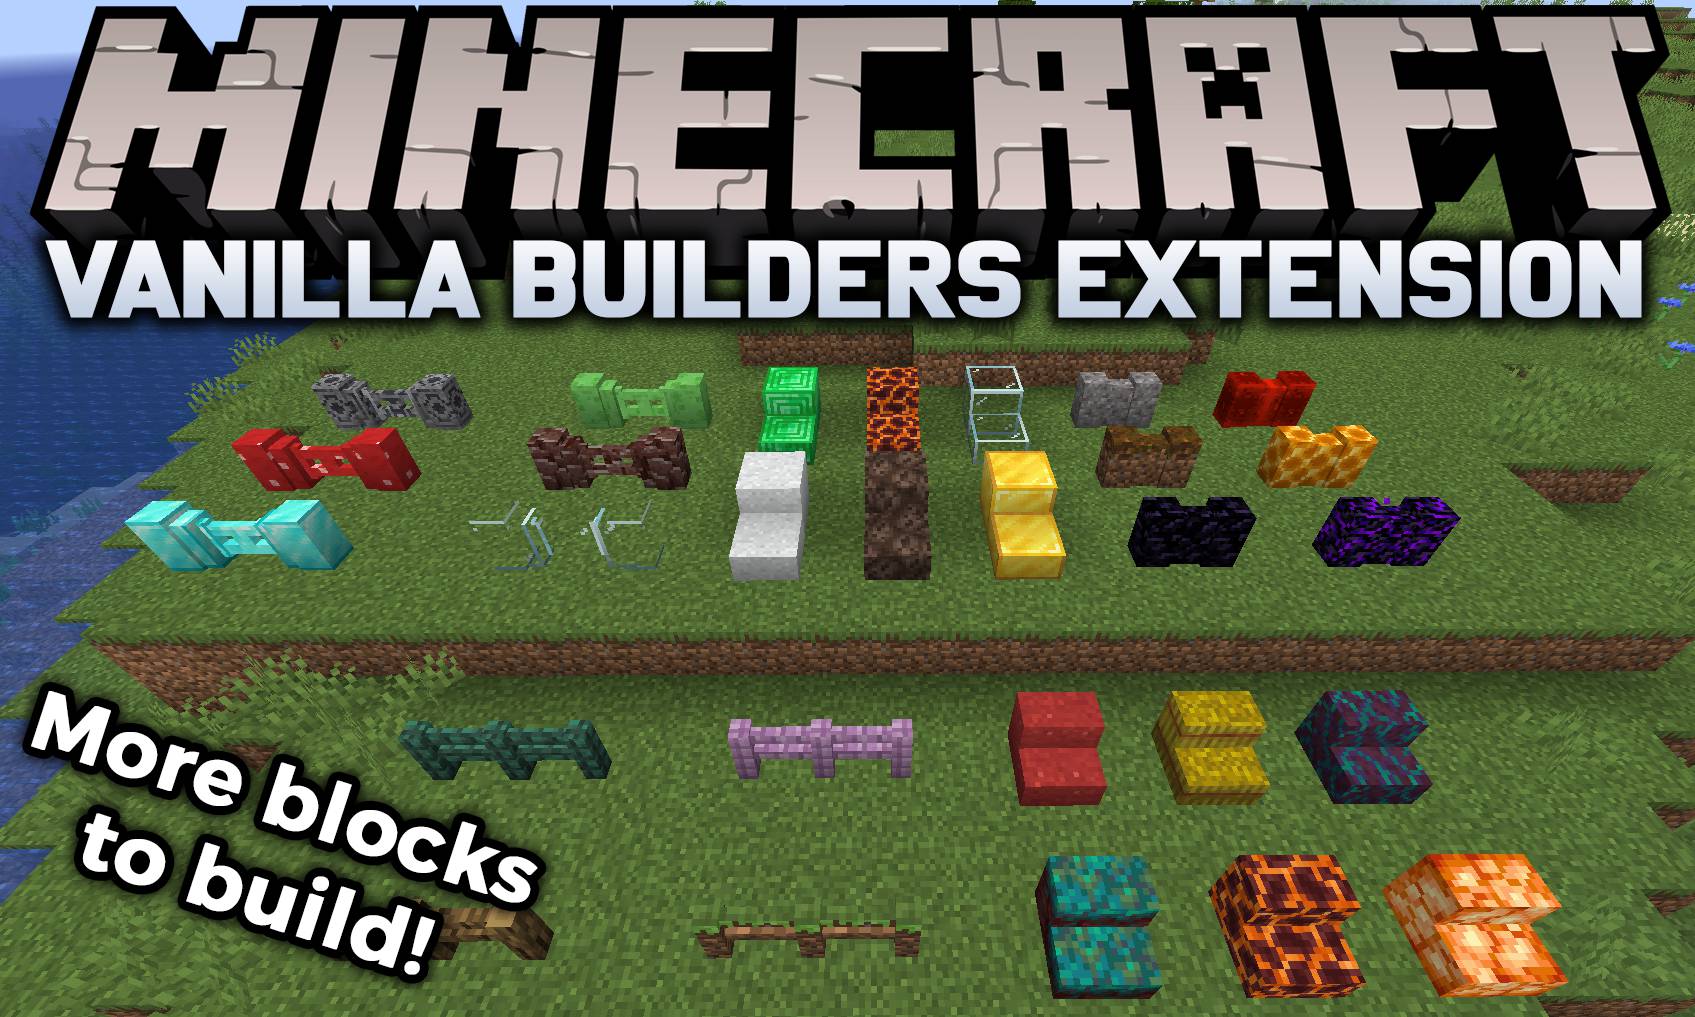 Vanilla Builders Extension Mod 1 16 4 1 15 2 More Blocks To Build 9minecraft Net